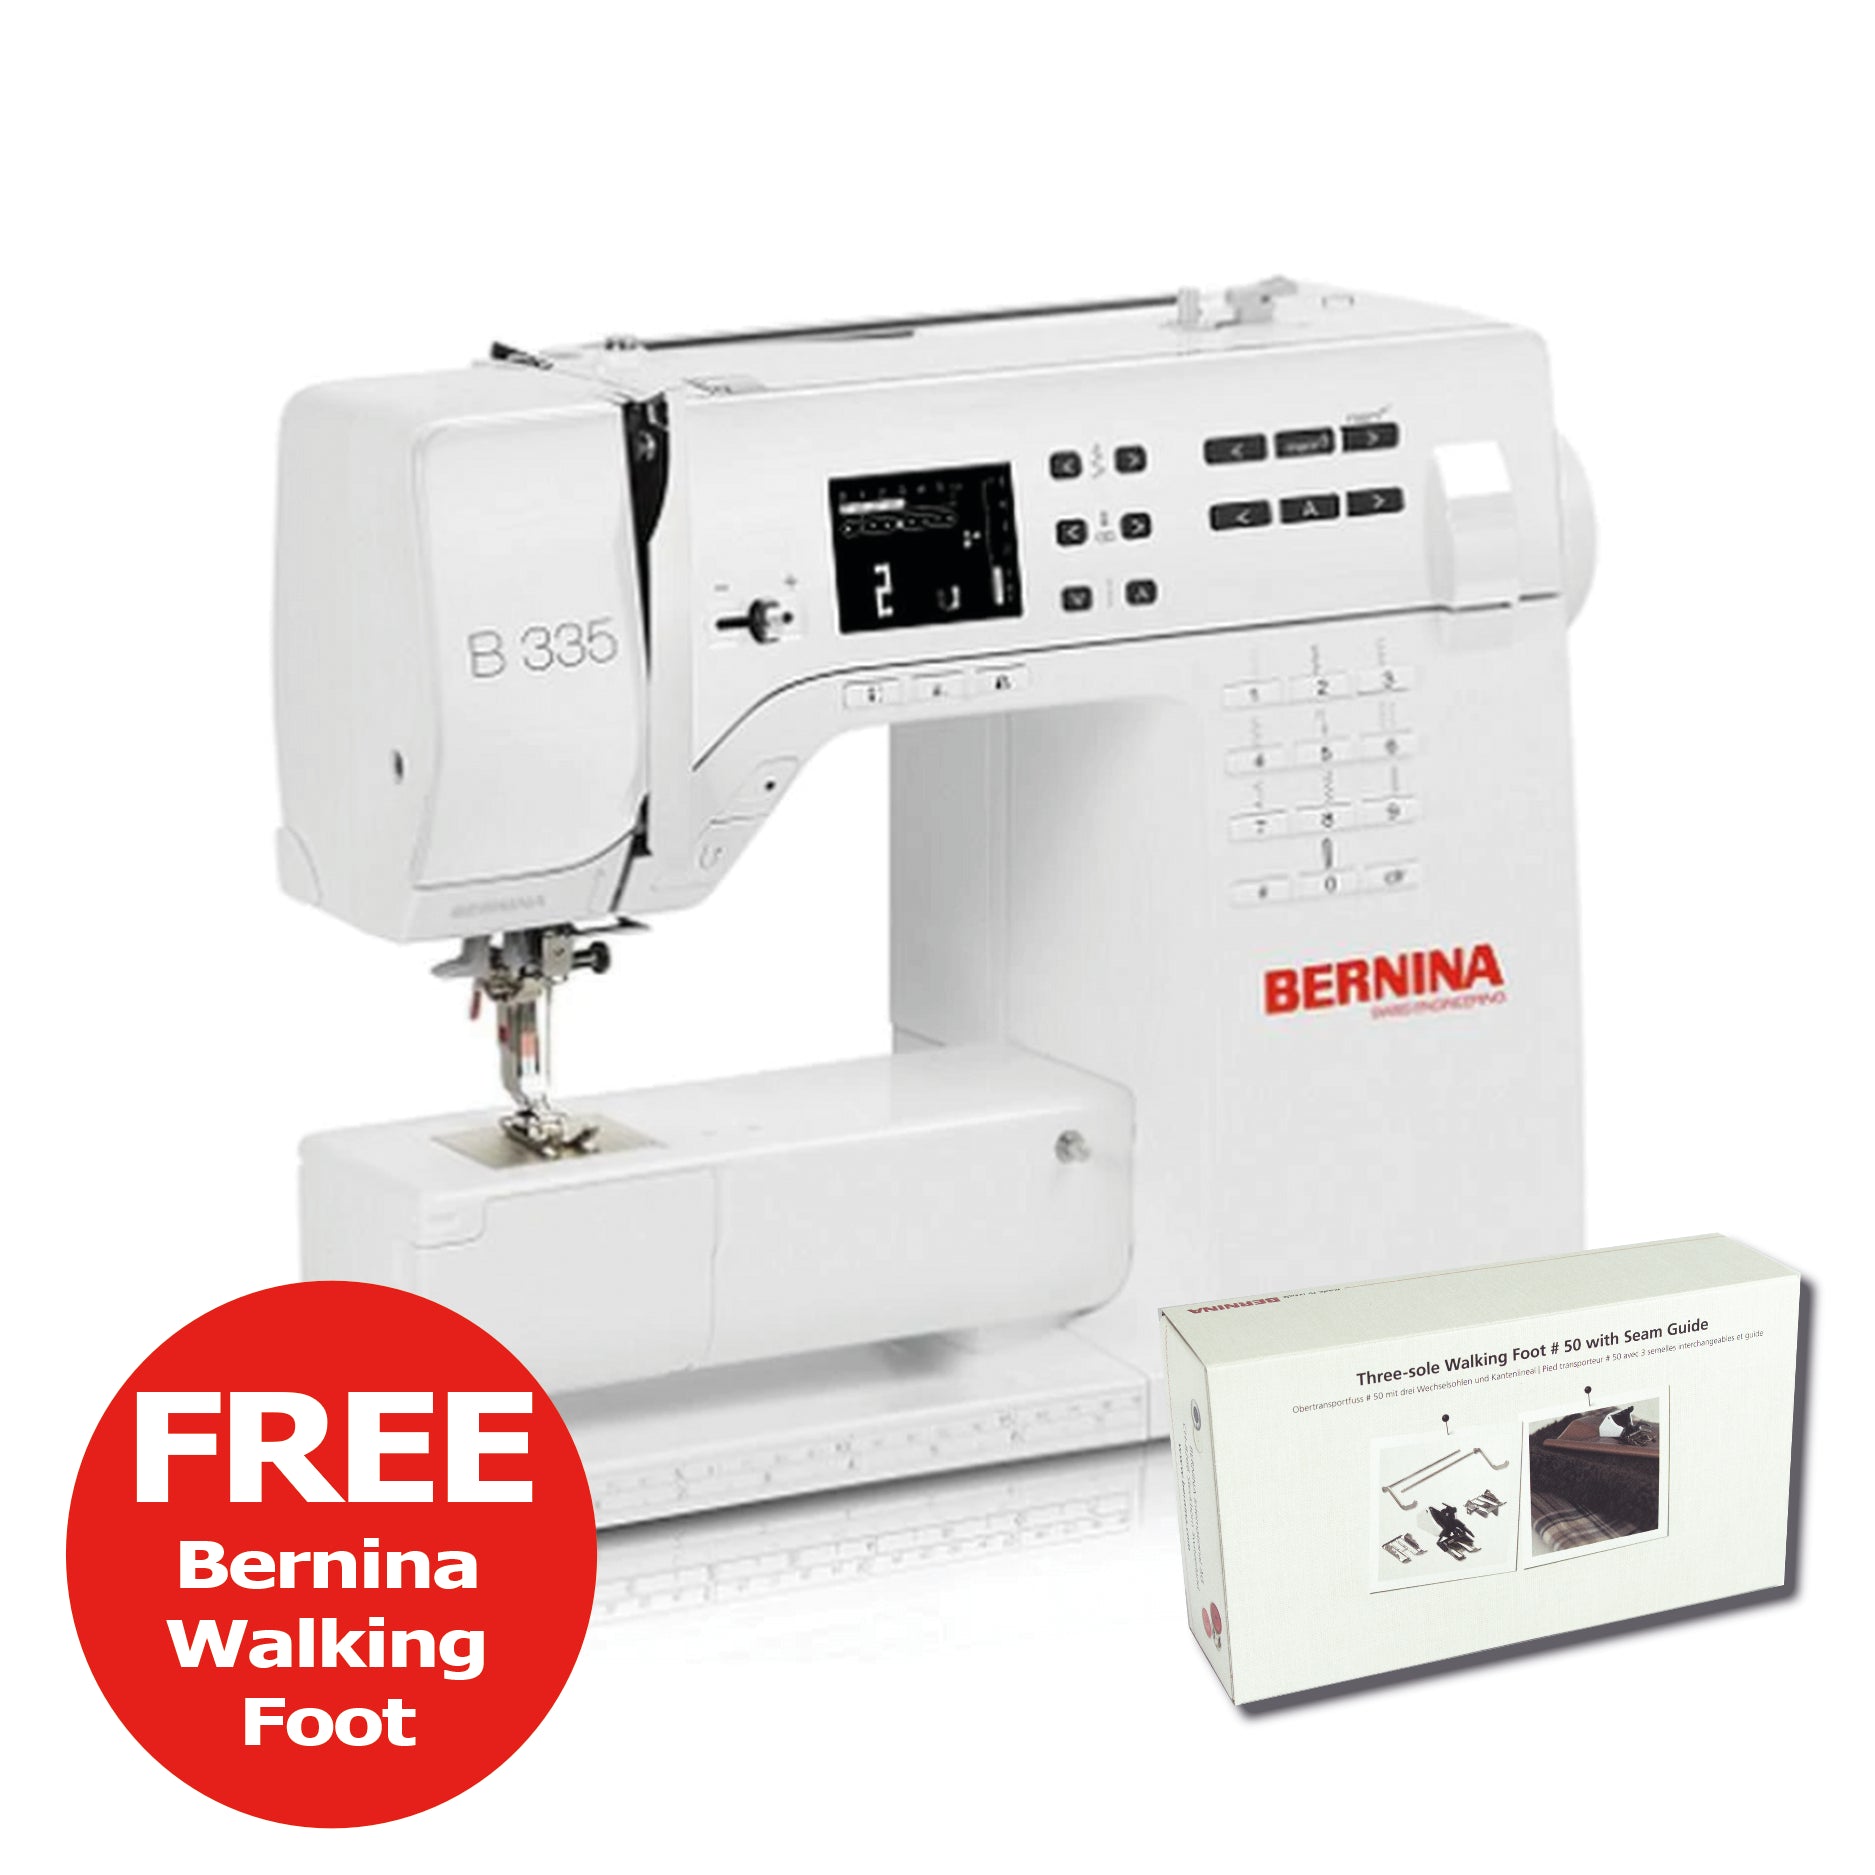 Bernina 335 sewing machine + Free walking foot from Jaycotts Sewing Supplies